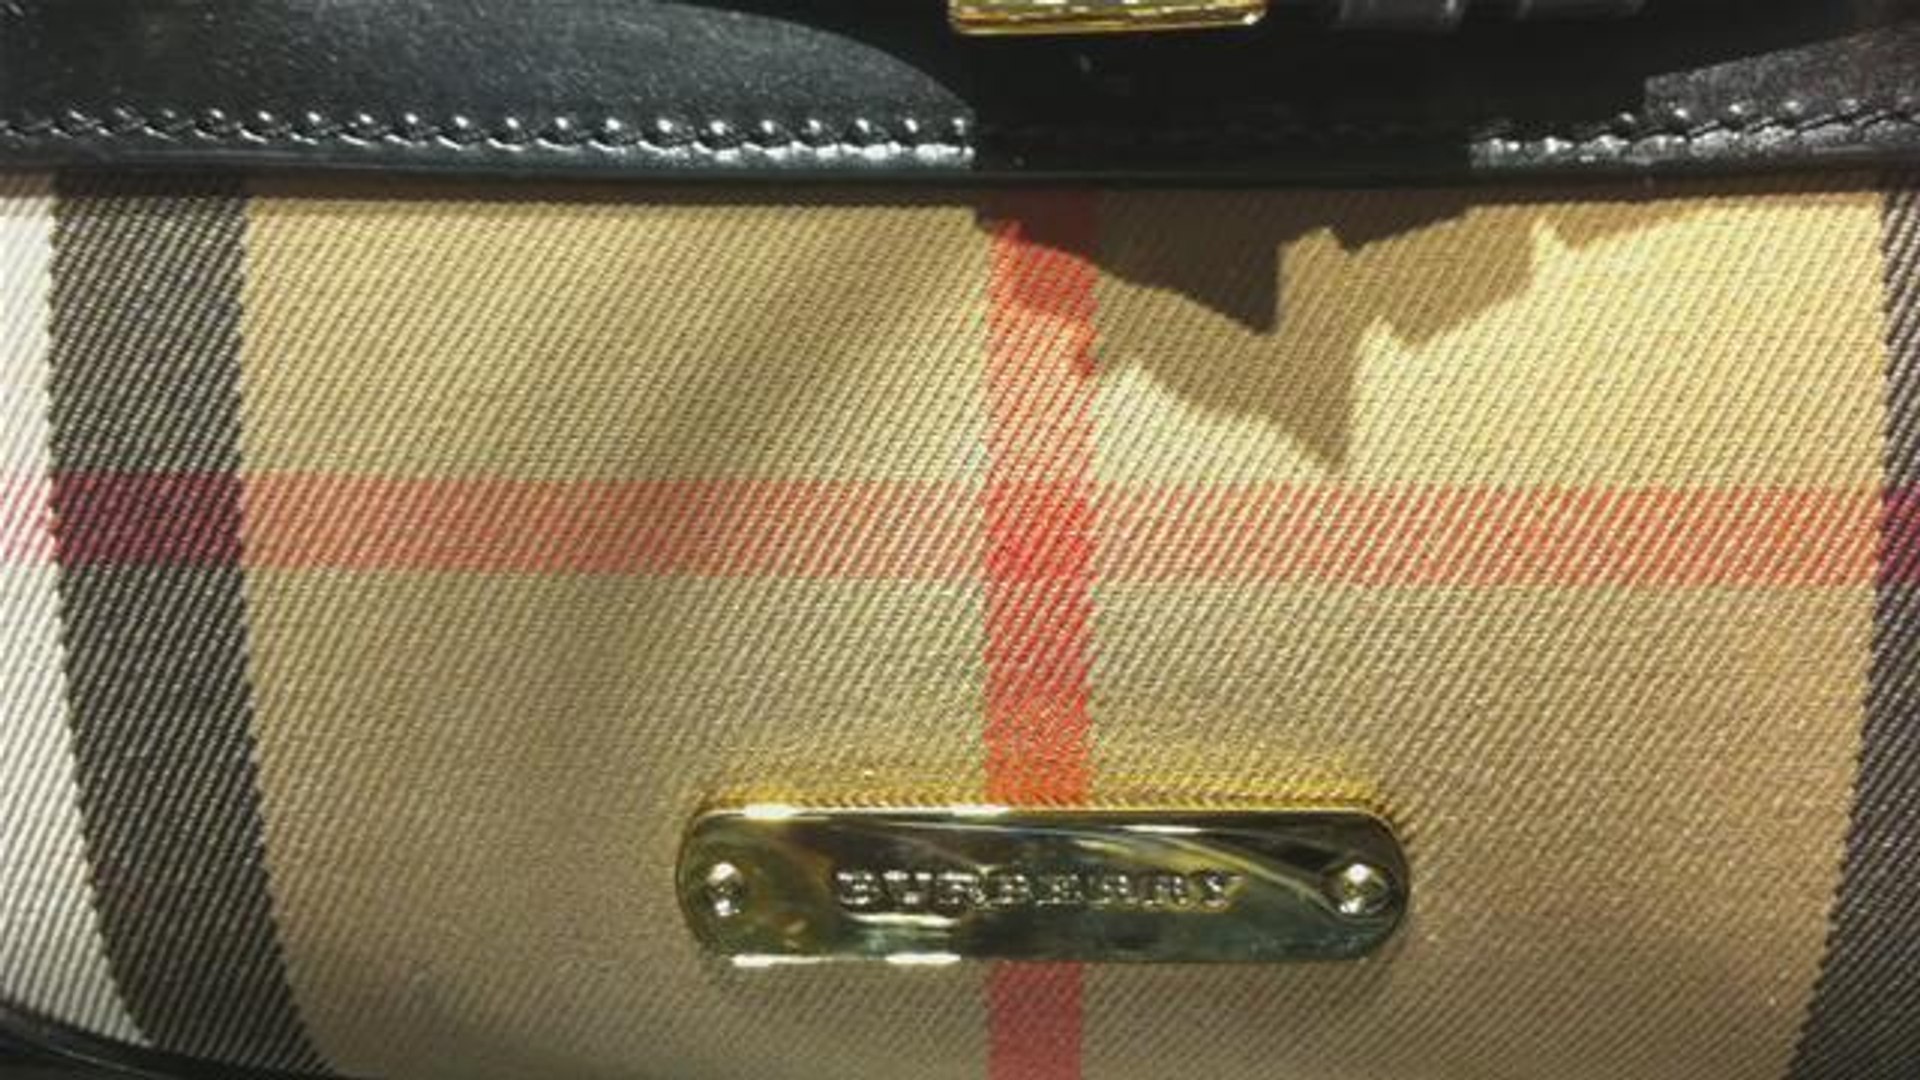 how to spot a fake burberry purse